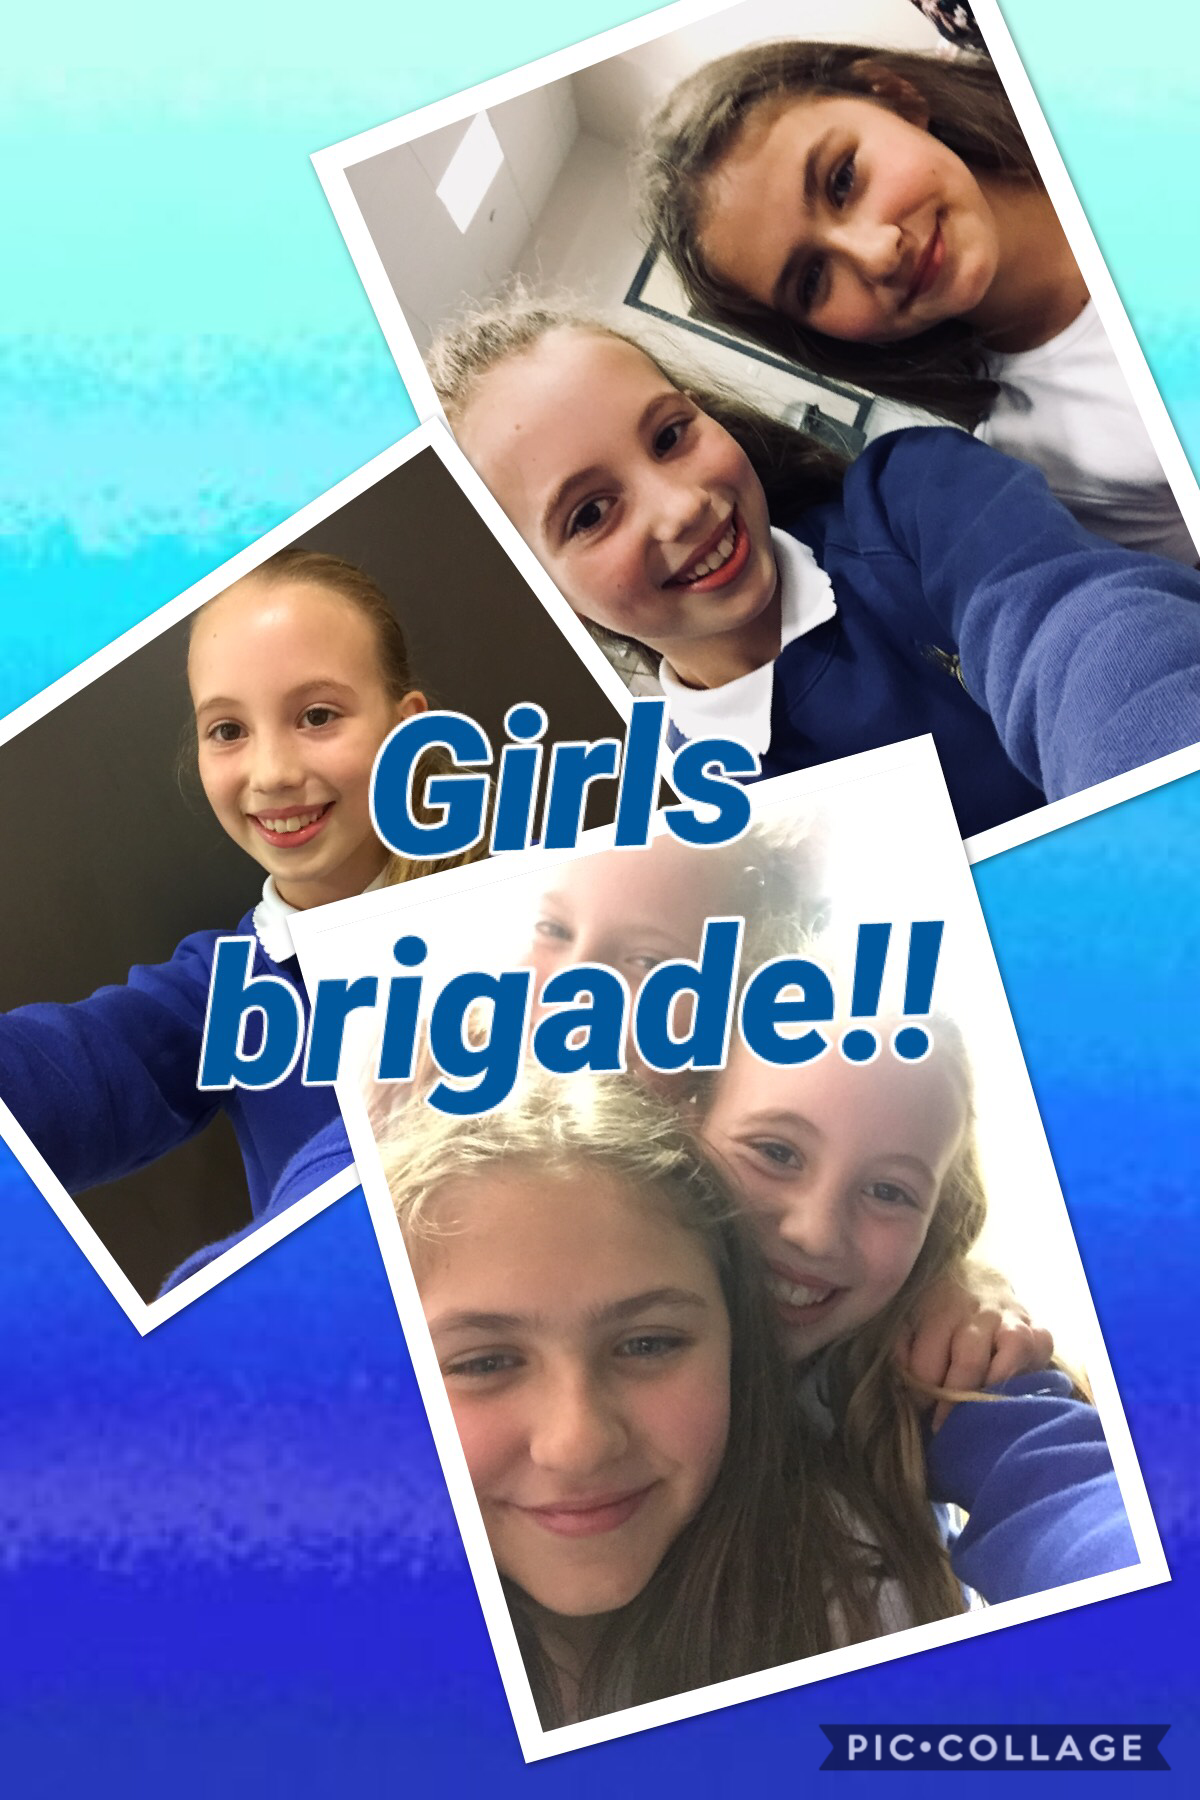 Girls Brigade Besties!!! 😊❤️😊